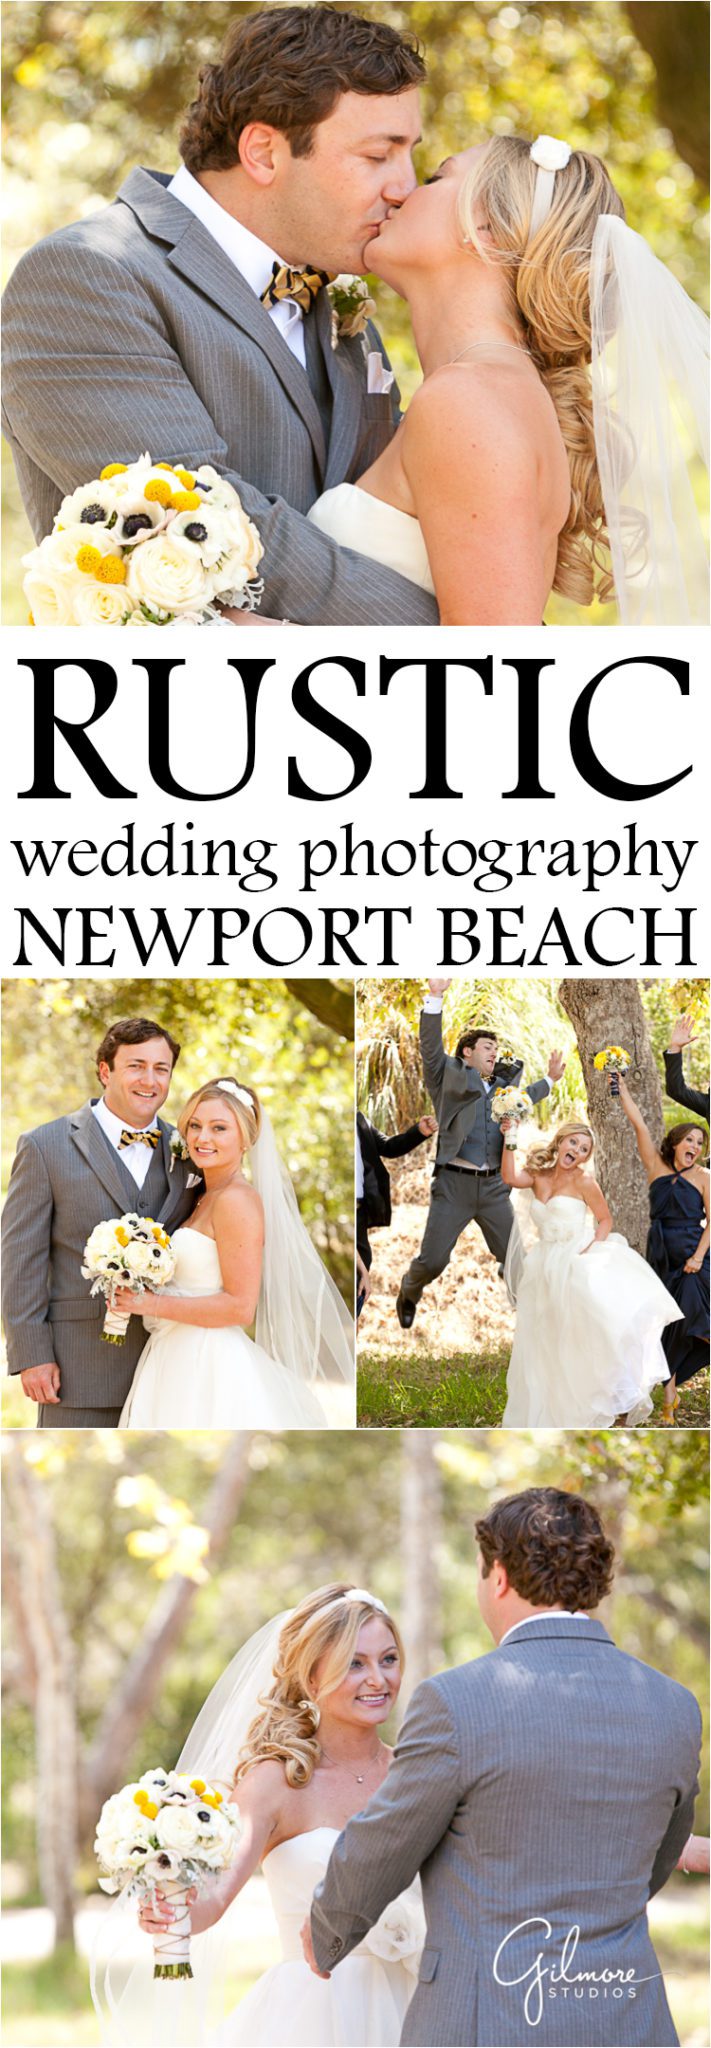 Newport-Beach-wedding-photographer